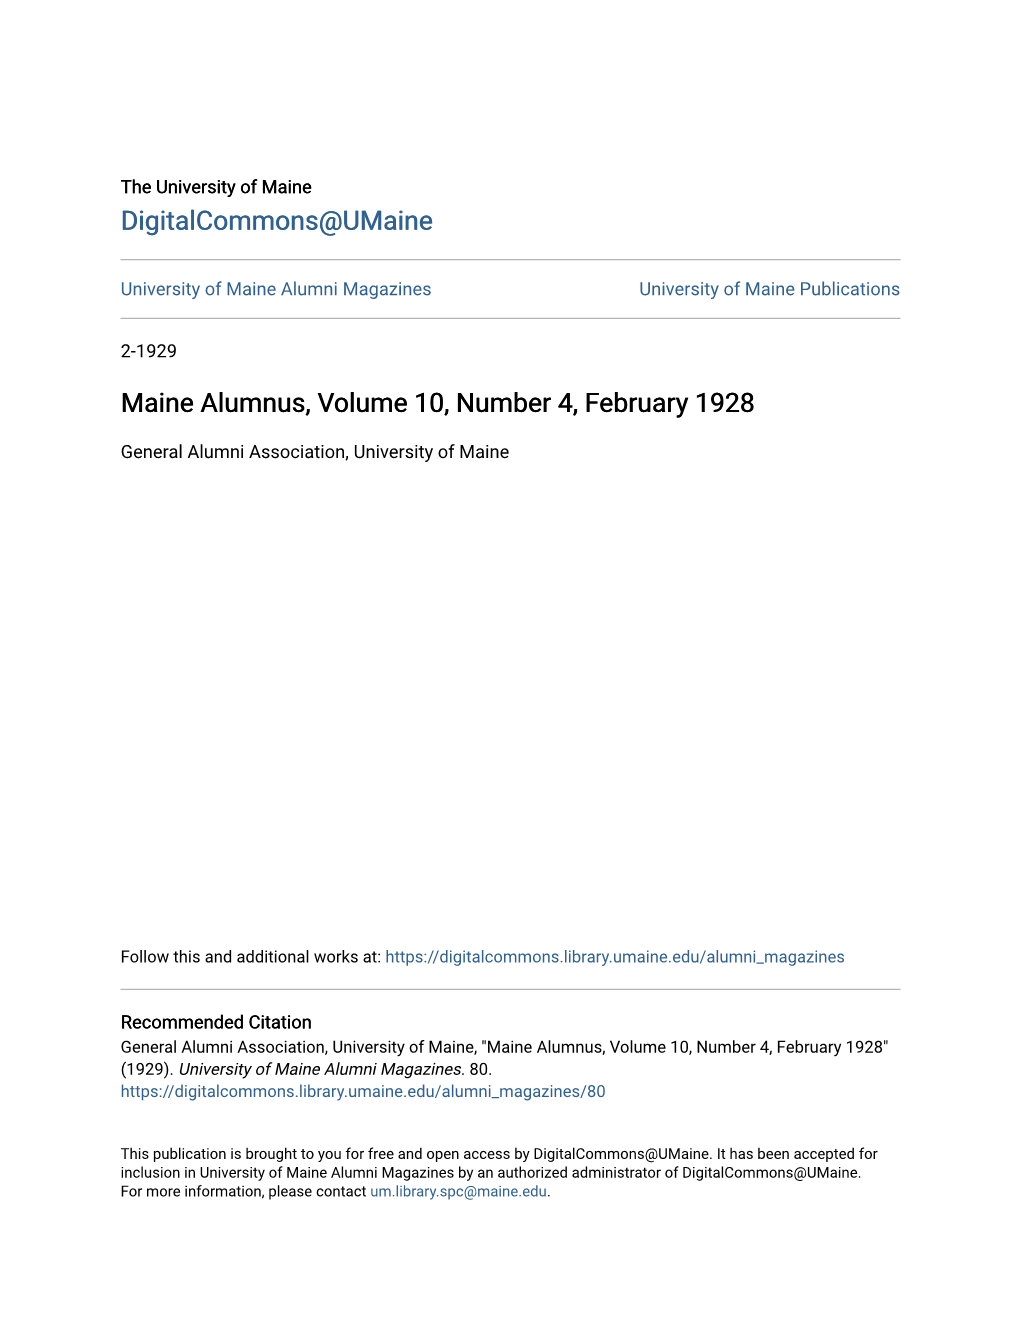 Maine Alumnus, Volume 10, Number 4, February 1928